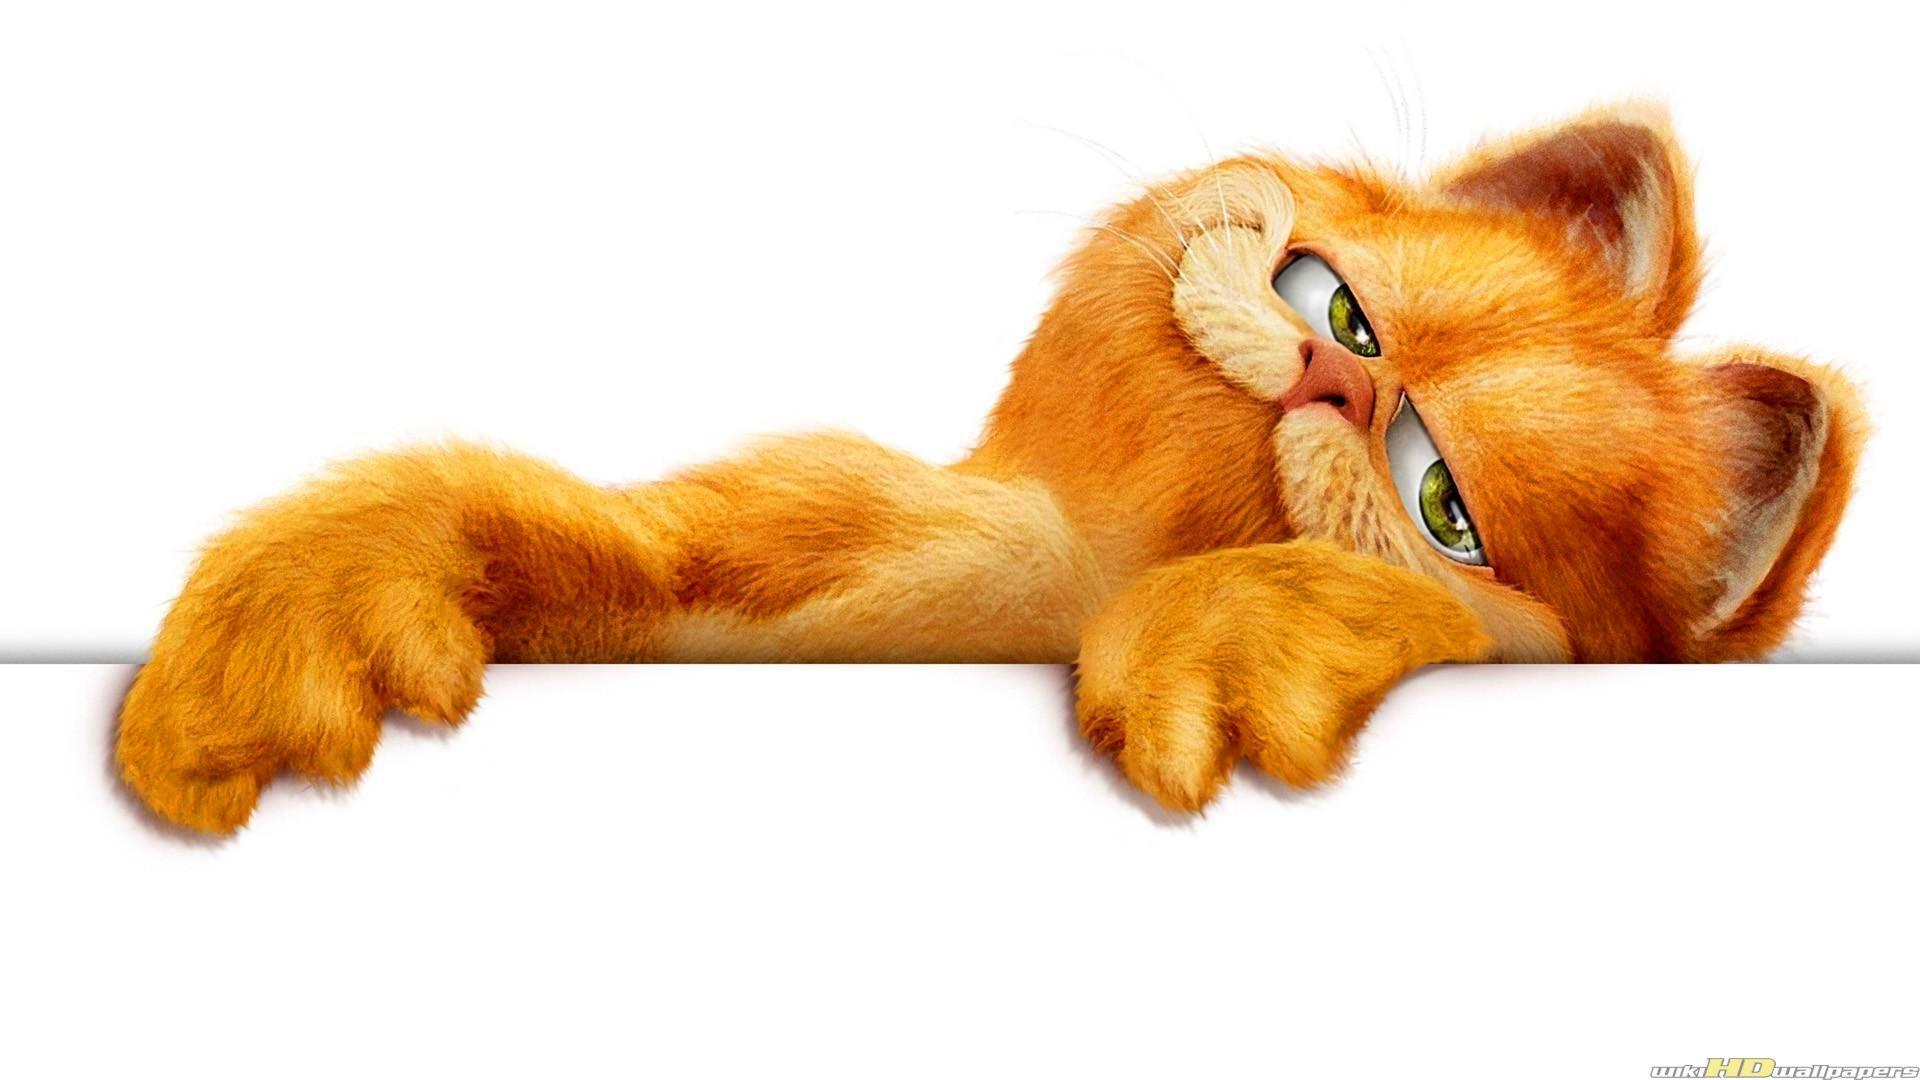 Movies Garfield Cat wallpaper (Desktop, Phone, Tablet)